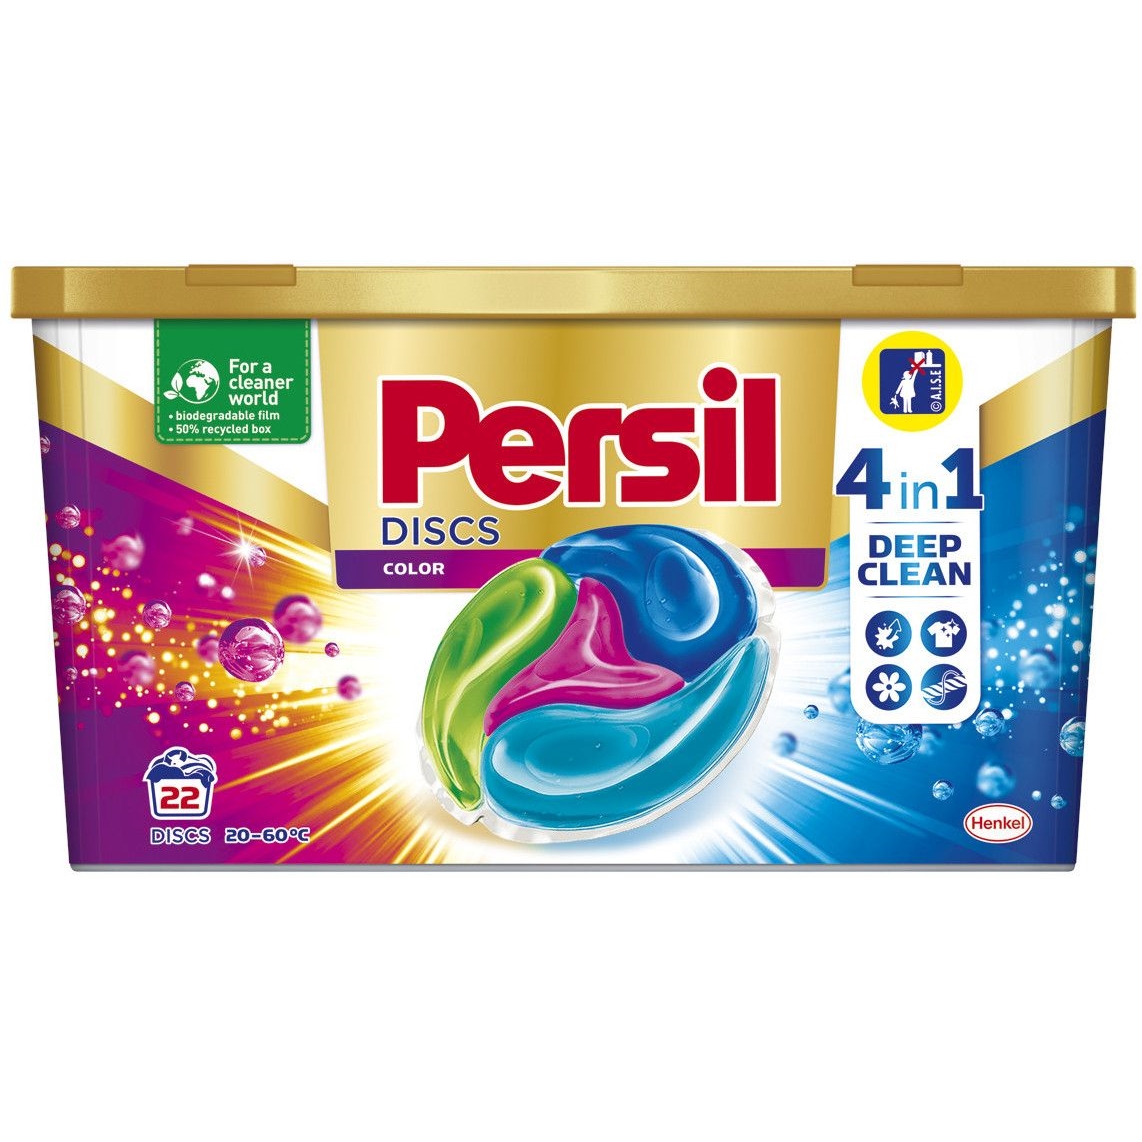 Persil Discs Color 4v1 kapsle na praní barevného prádla box 22 dávek 550g